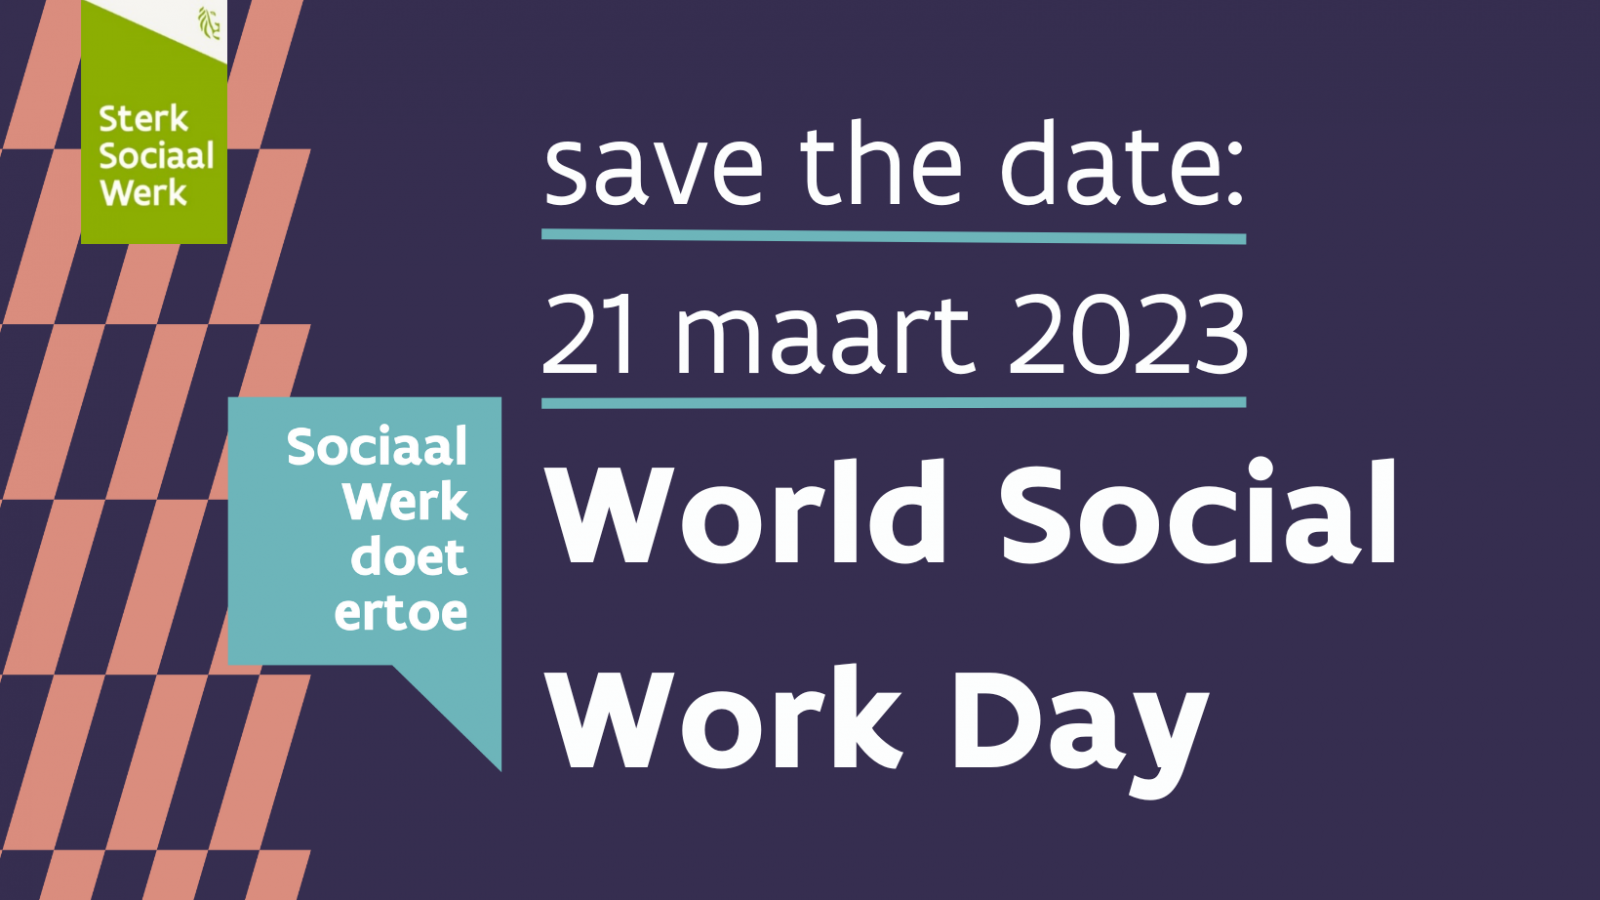 World social work day 2023